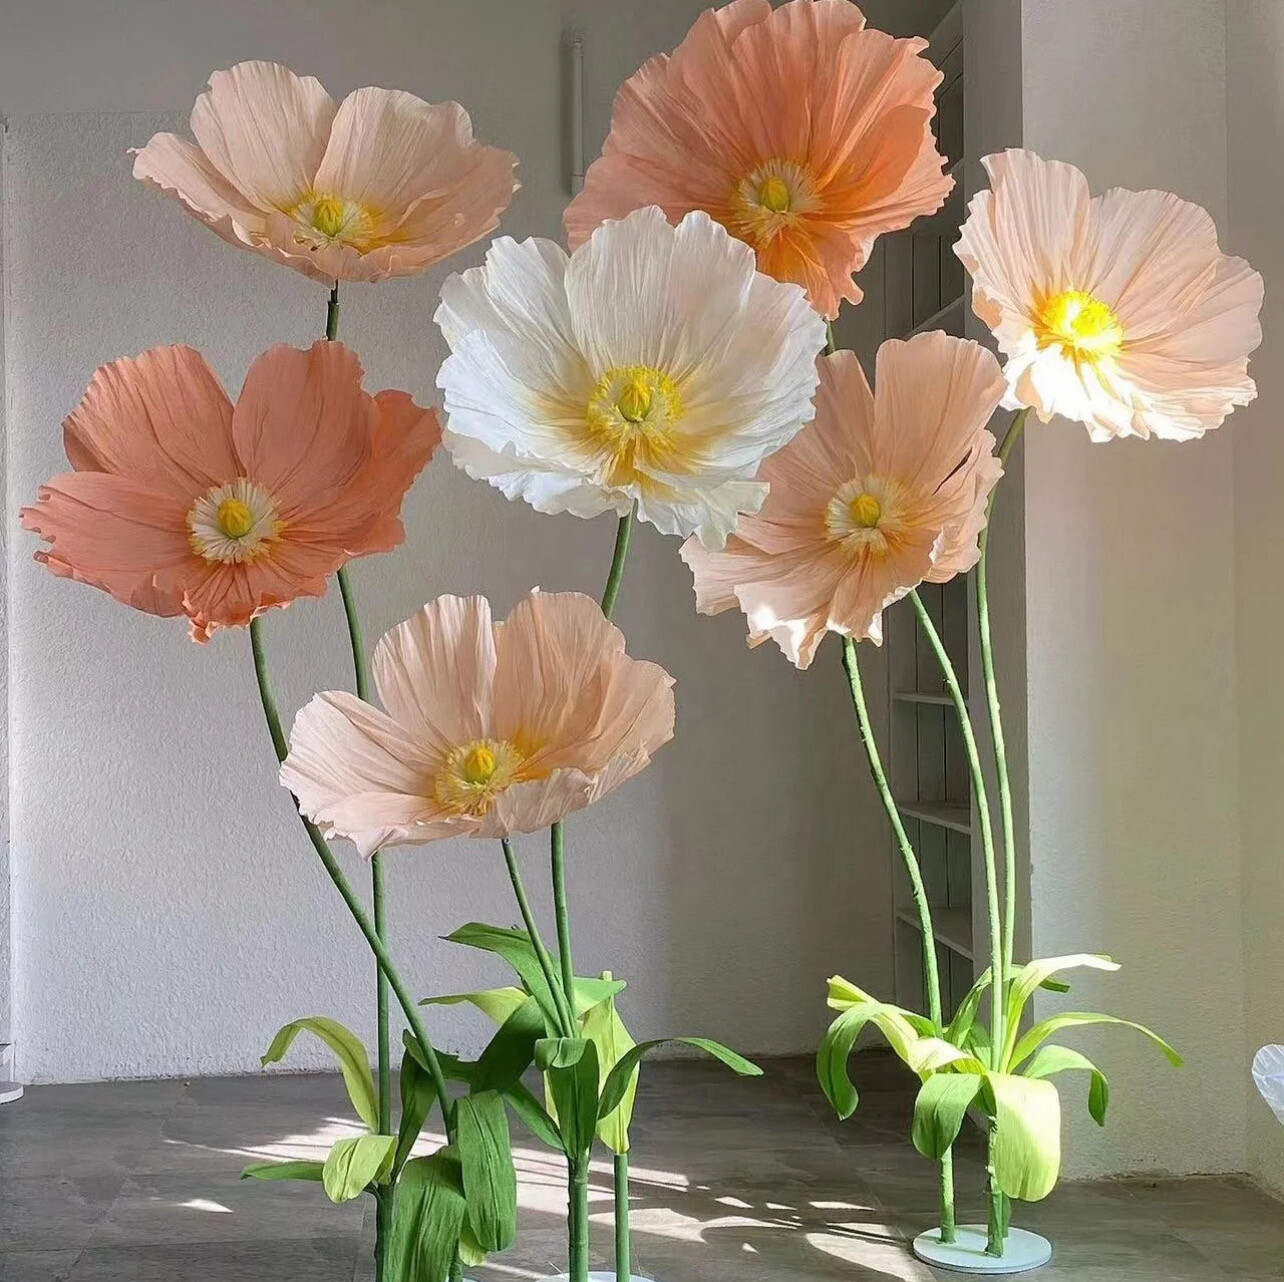 "Blossoming Splendor: Giant Poppy Flower Extravaganza"